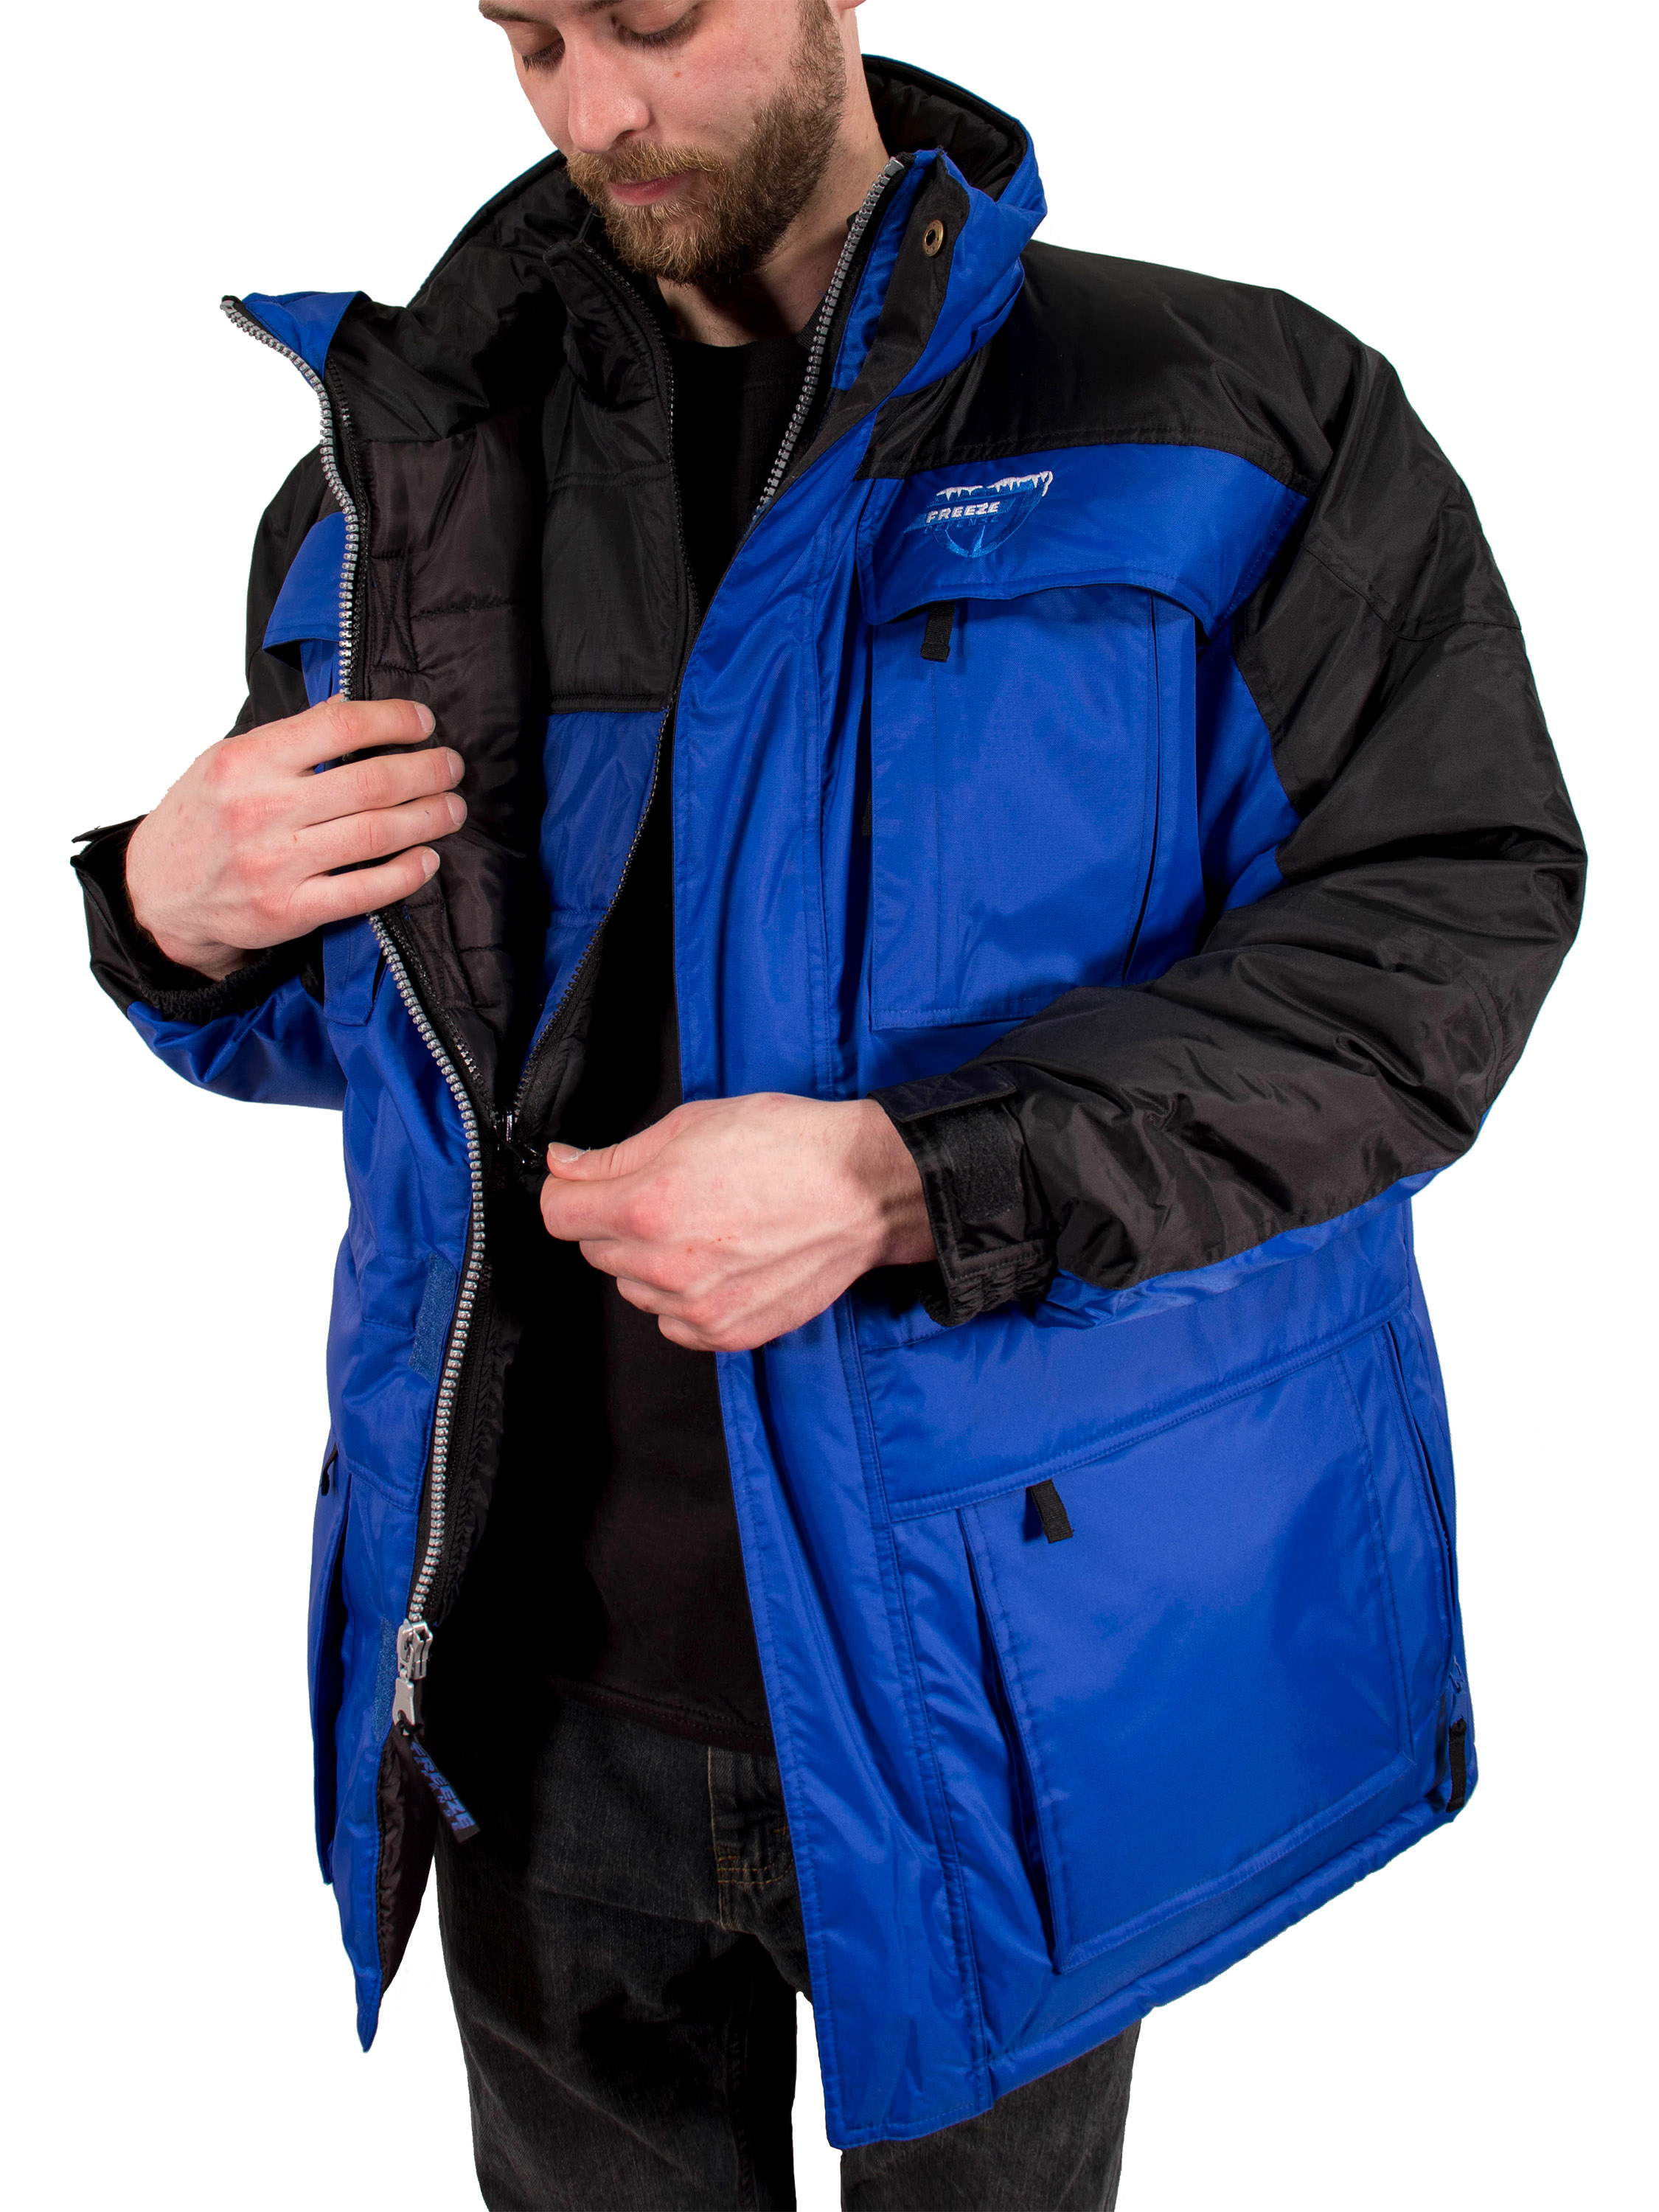 Freeze Defense Warm Men's 3in1 Winter Jacket Coat Parka & Vest (Small, Blue) - image 5 of 10